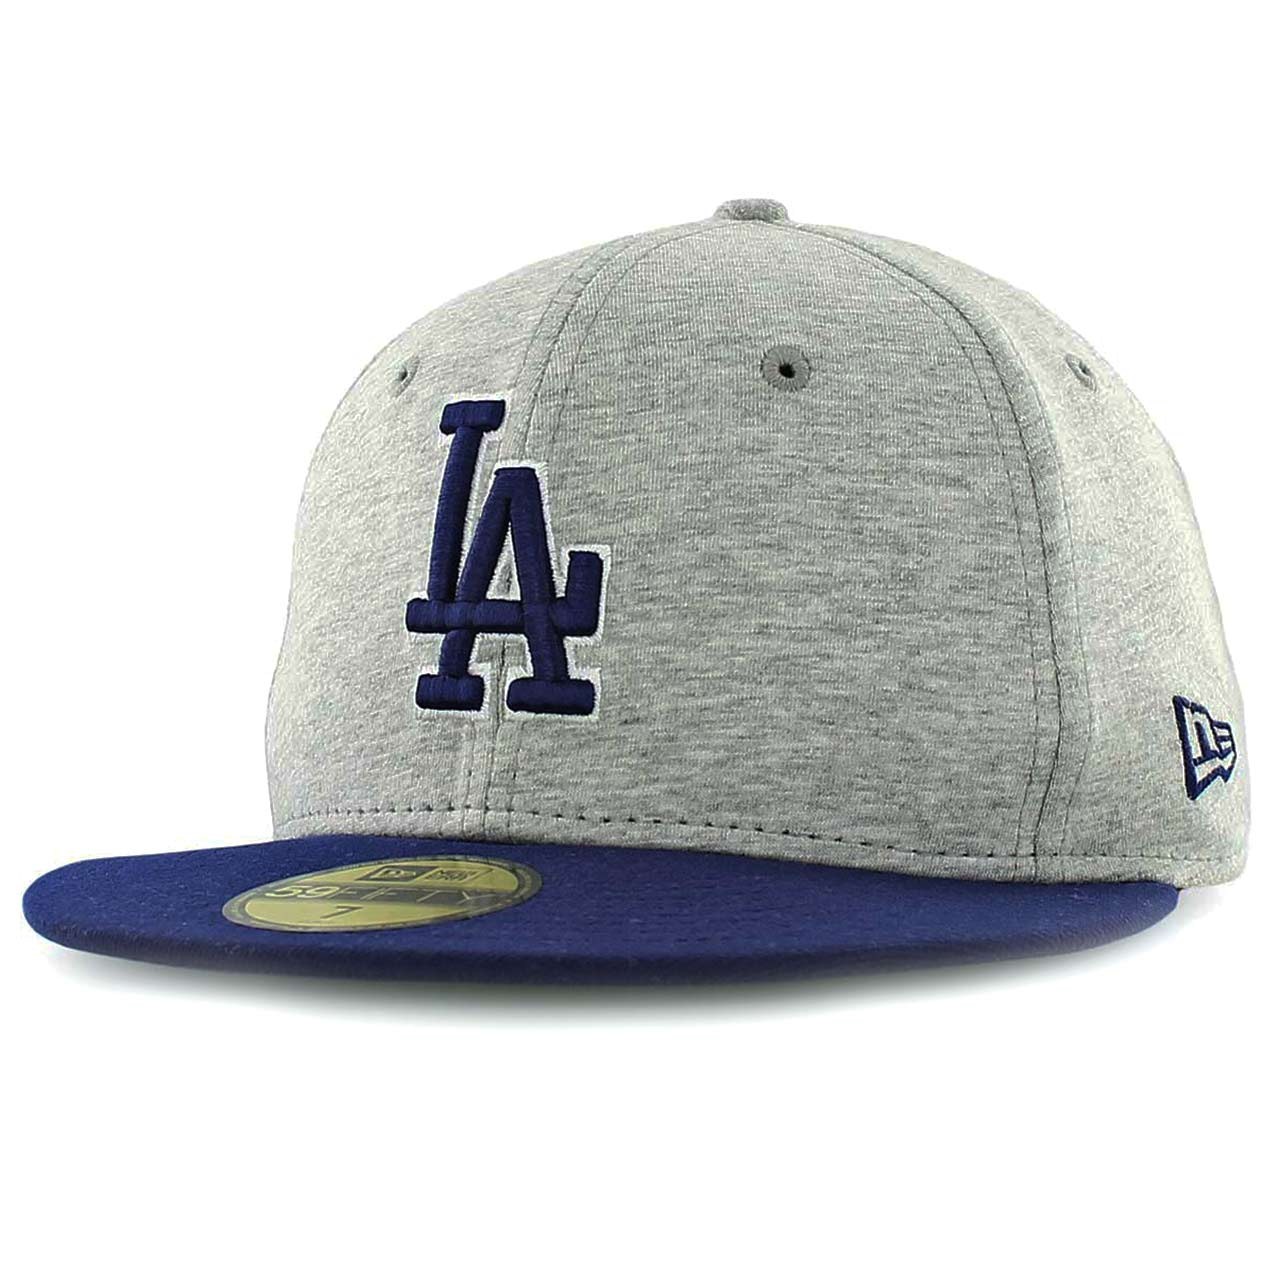 کلاه کپ نیو ارا مدل Los Angeles Dodgers